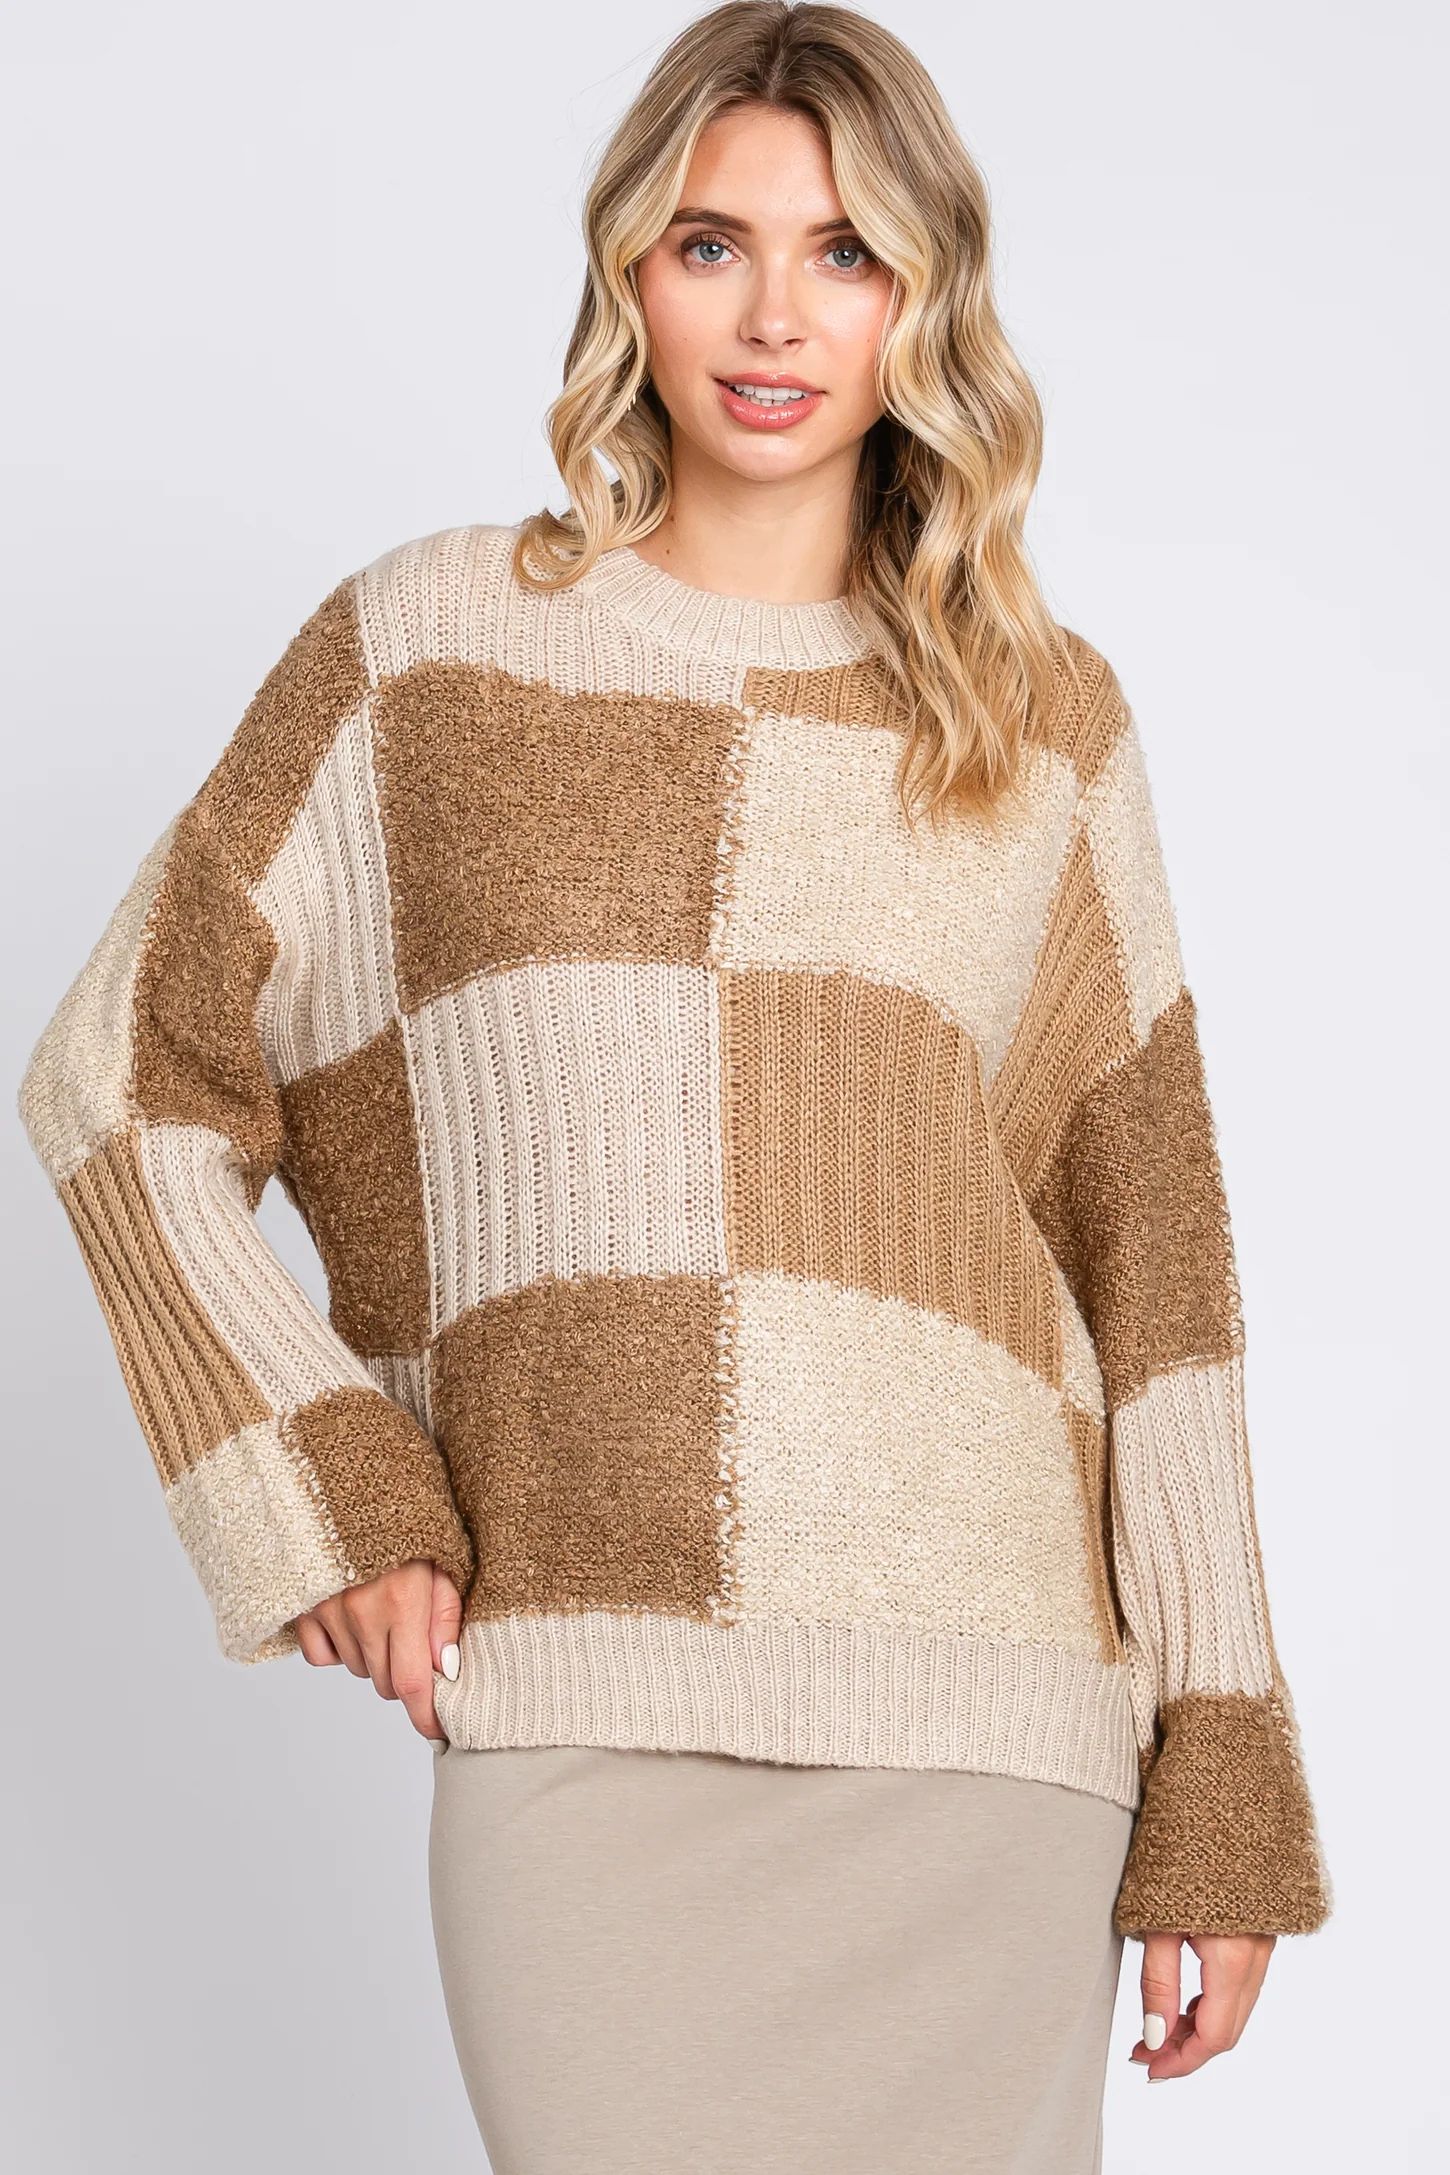 Mocha Multi-Textured Checkered Sweater | PinkBlush Maternity